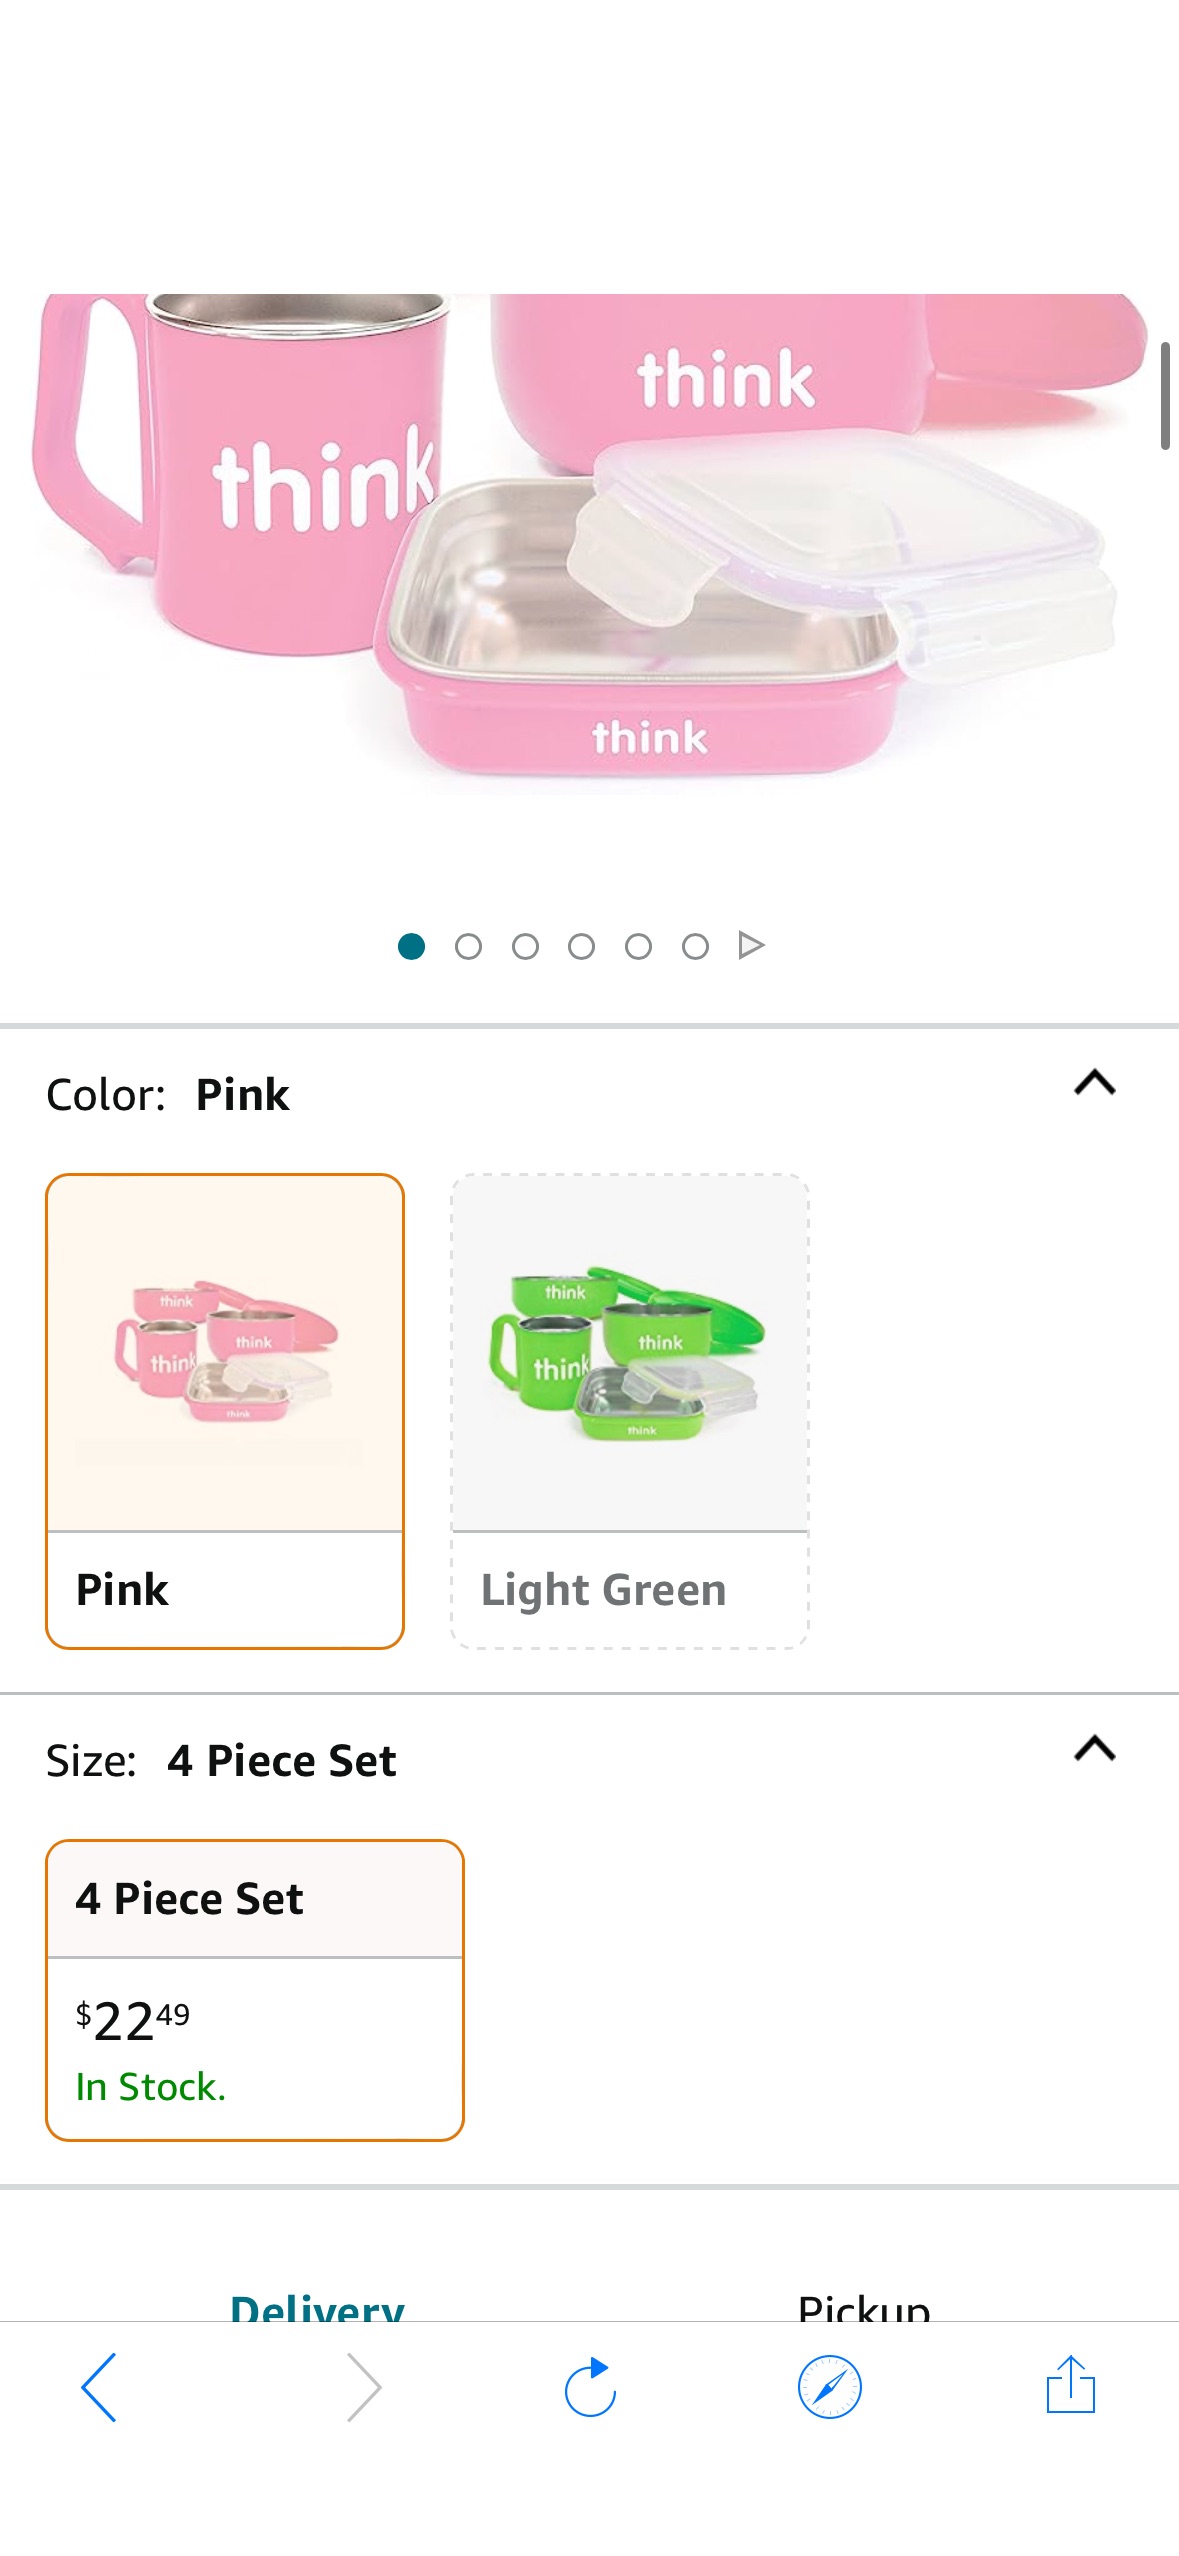 Amazon.com : Thinkbaby Complete BPA Free Feeding Set (Pink) : Baby Dinnerware Sets : Baby